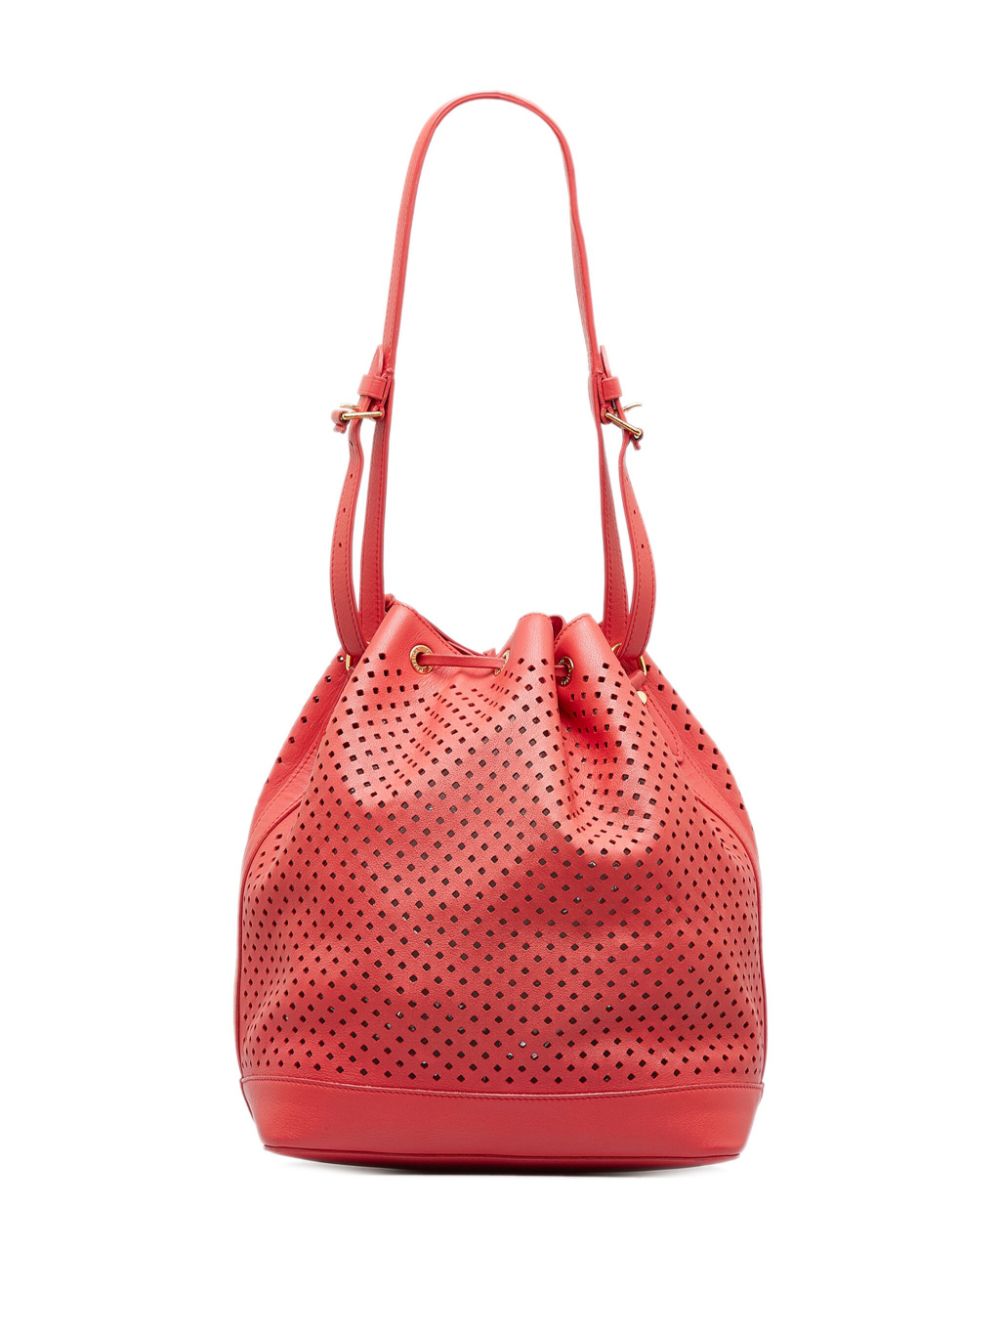 Louis Vuitton Sofia Coppola Red Leather Handbag (Pre-Owned)